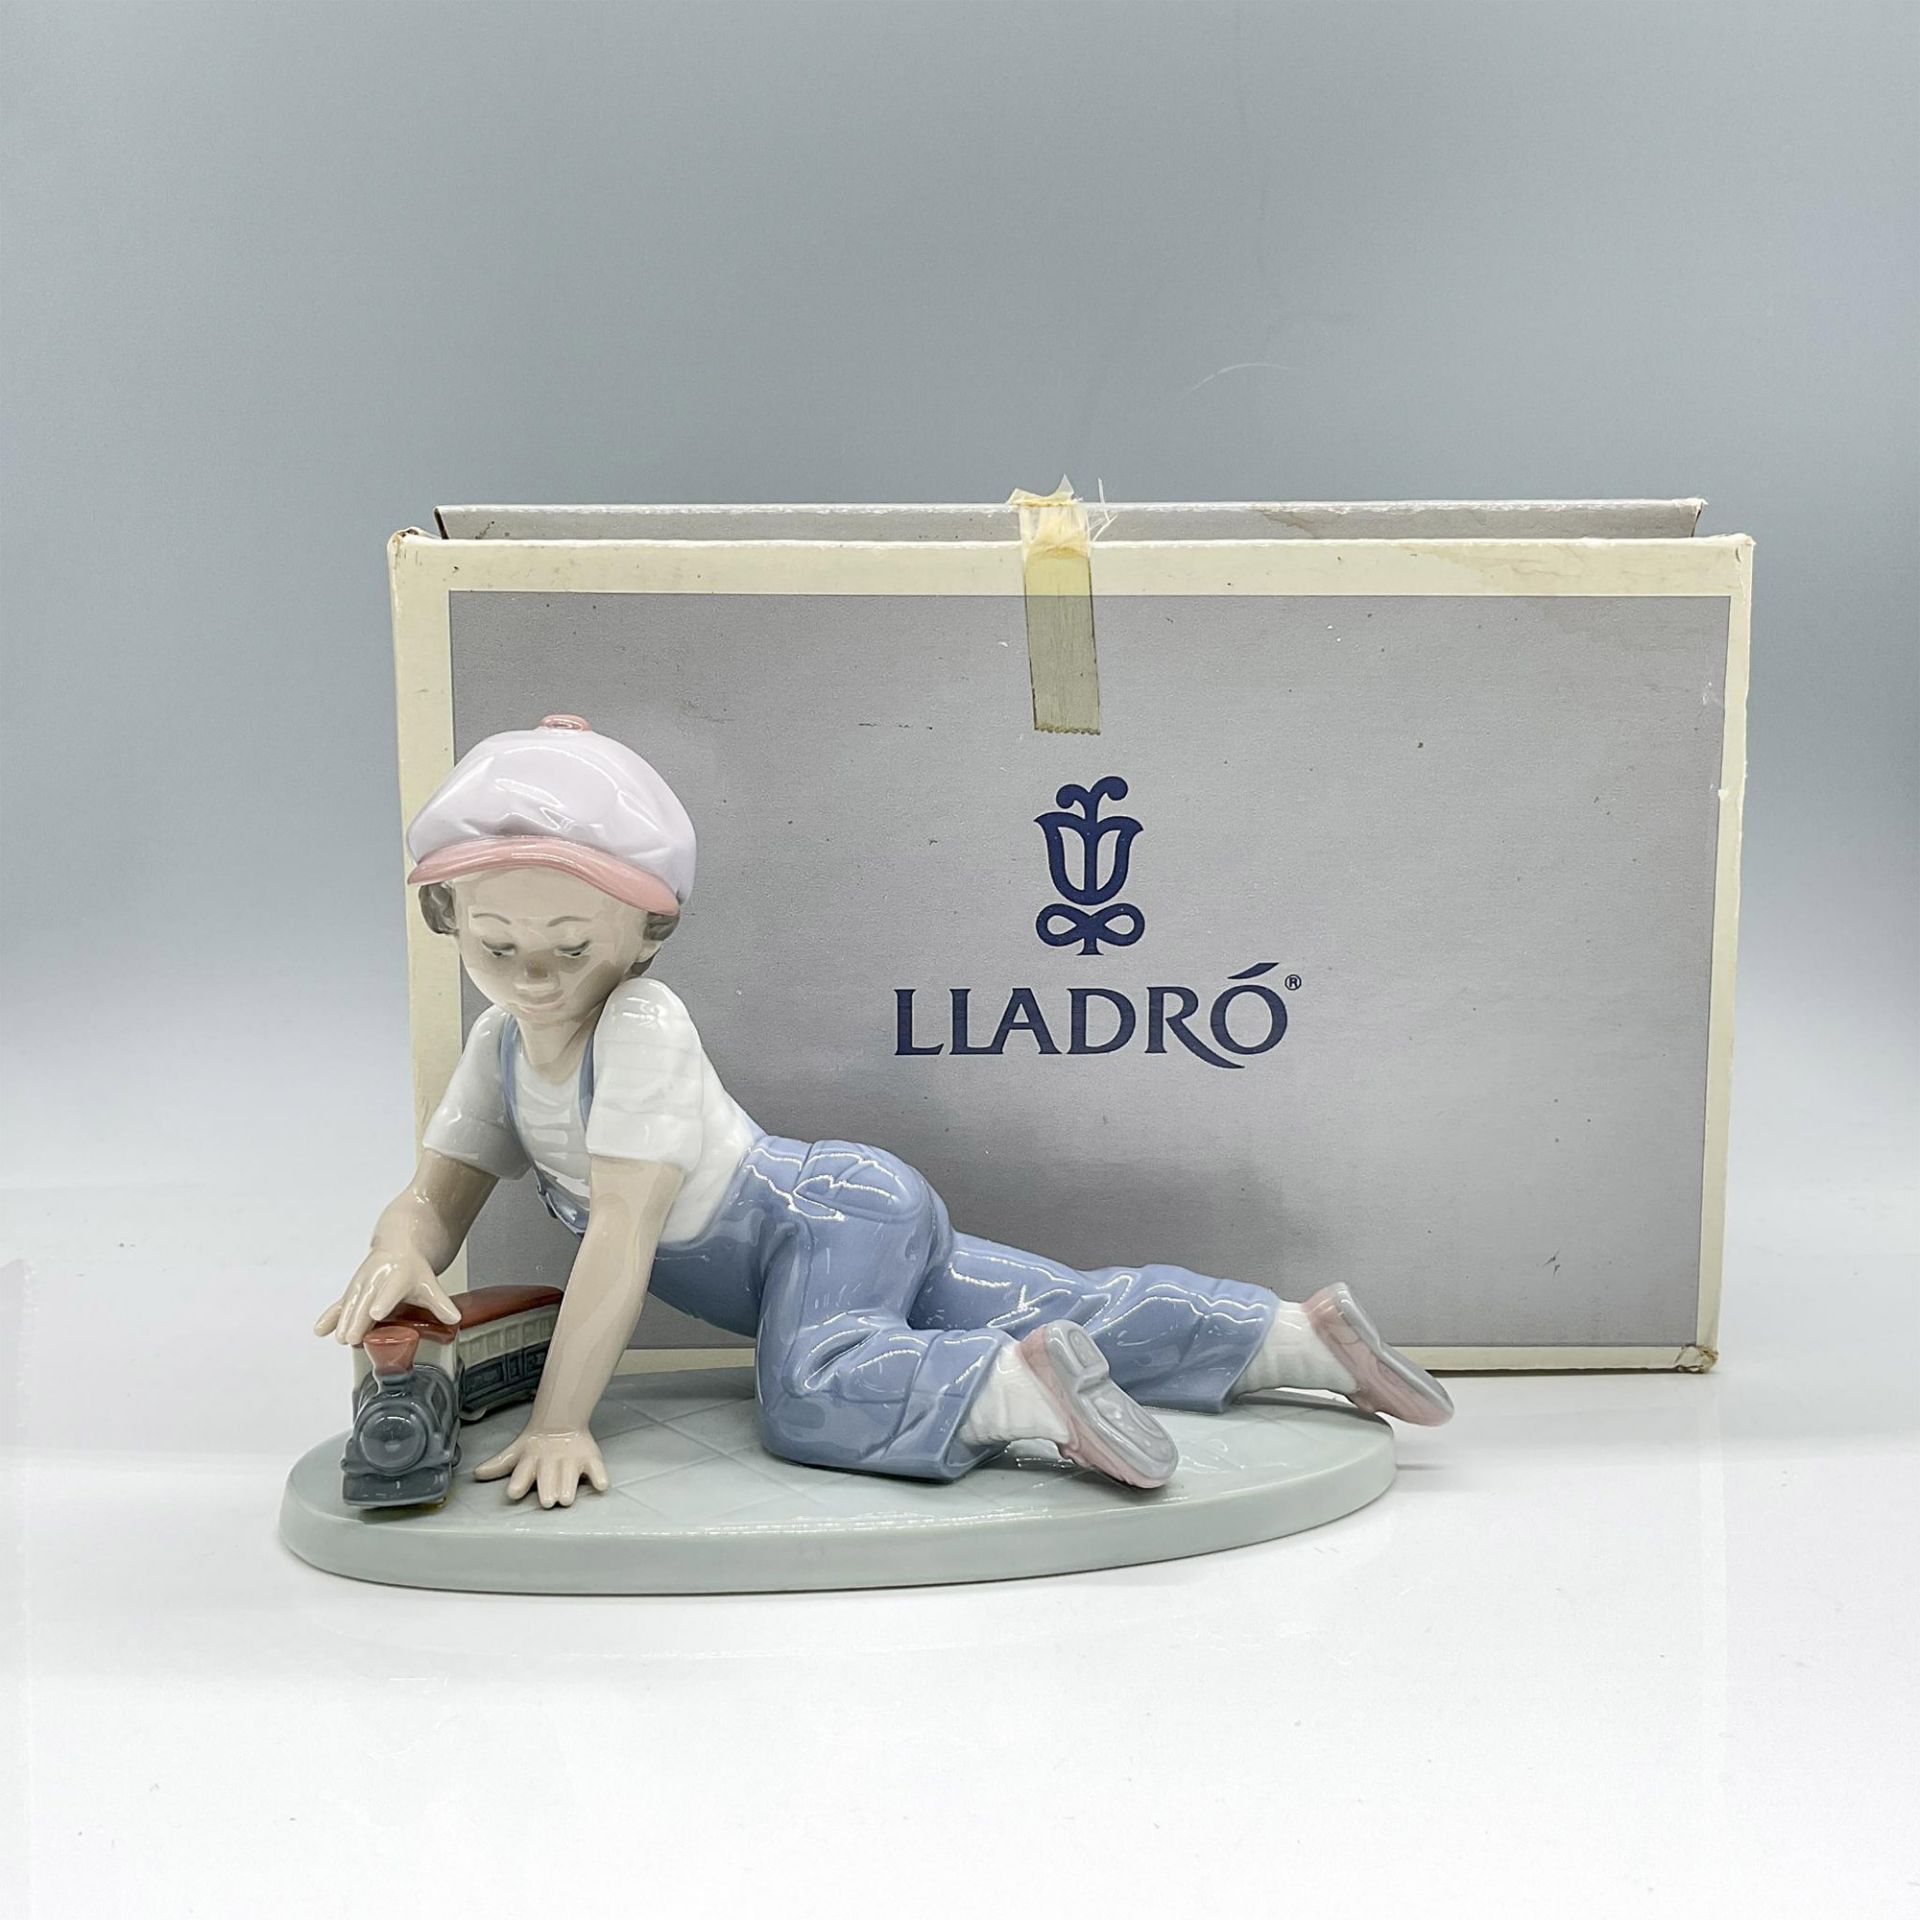 All Aboard 1007619 - Lladro Porcelain Figurine